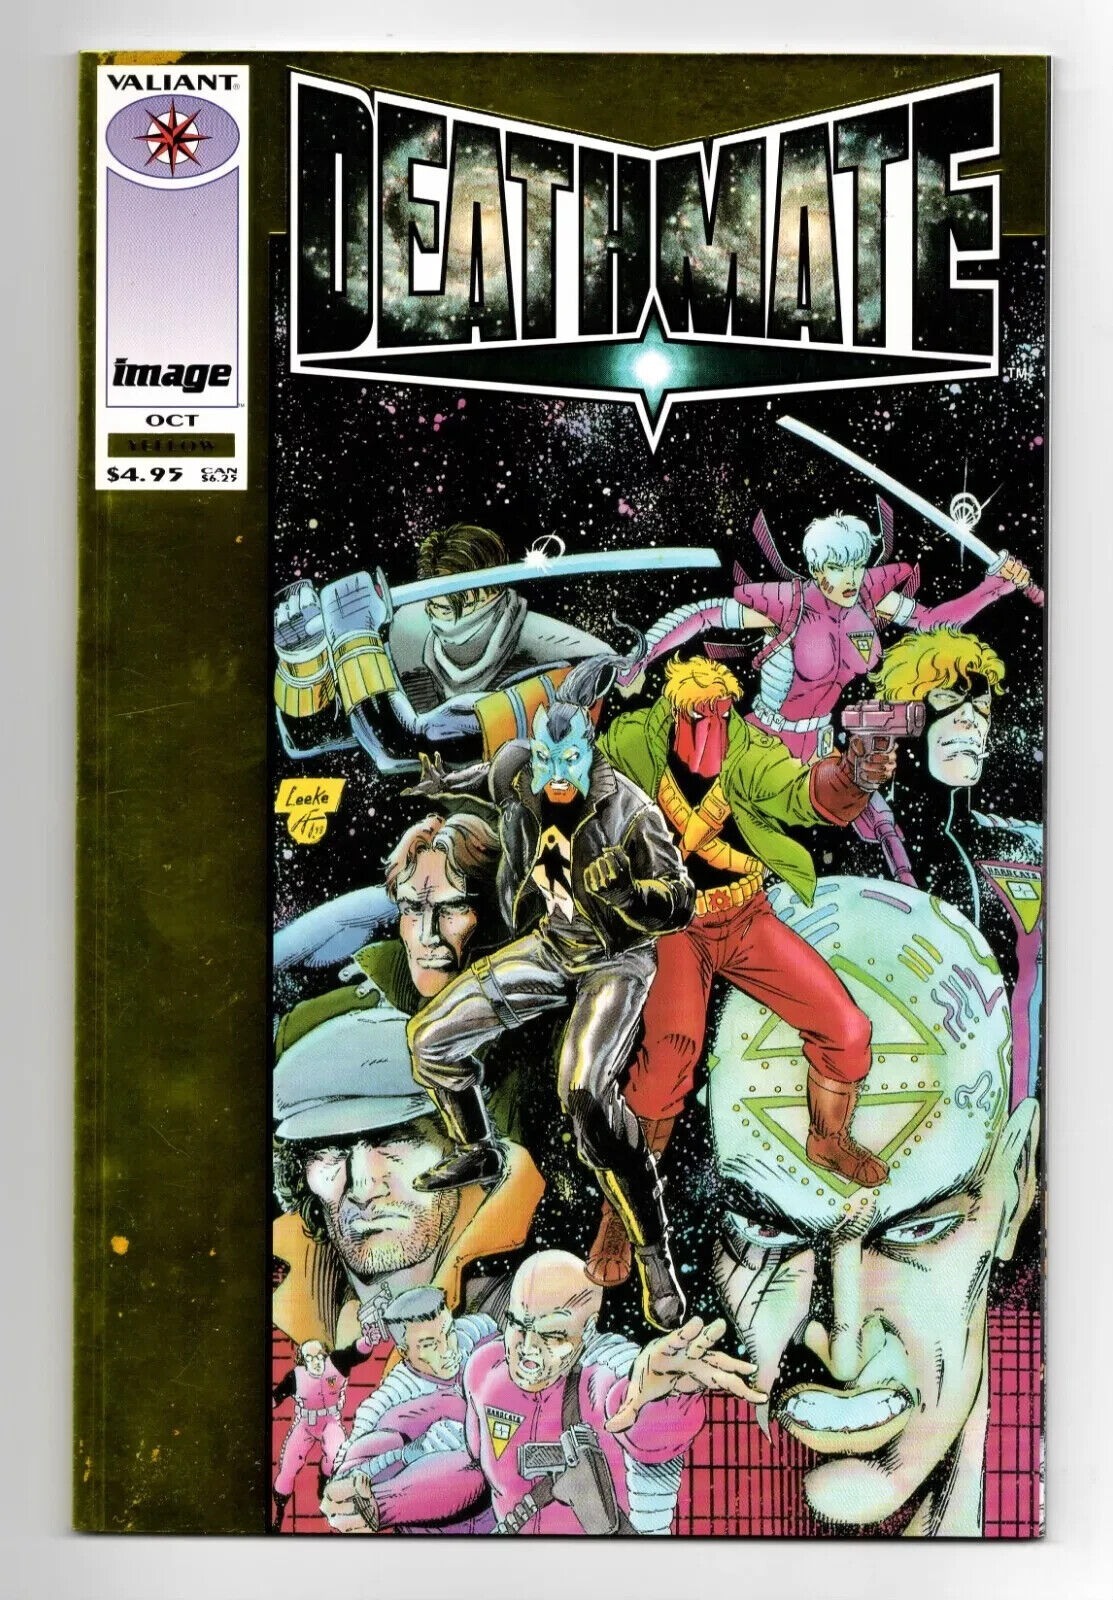 DEATHMATE: YELLOW - Oct. 1993, Valiant / Image Comics